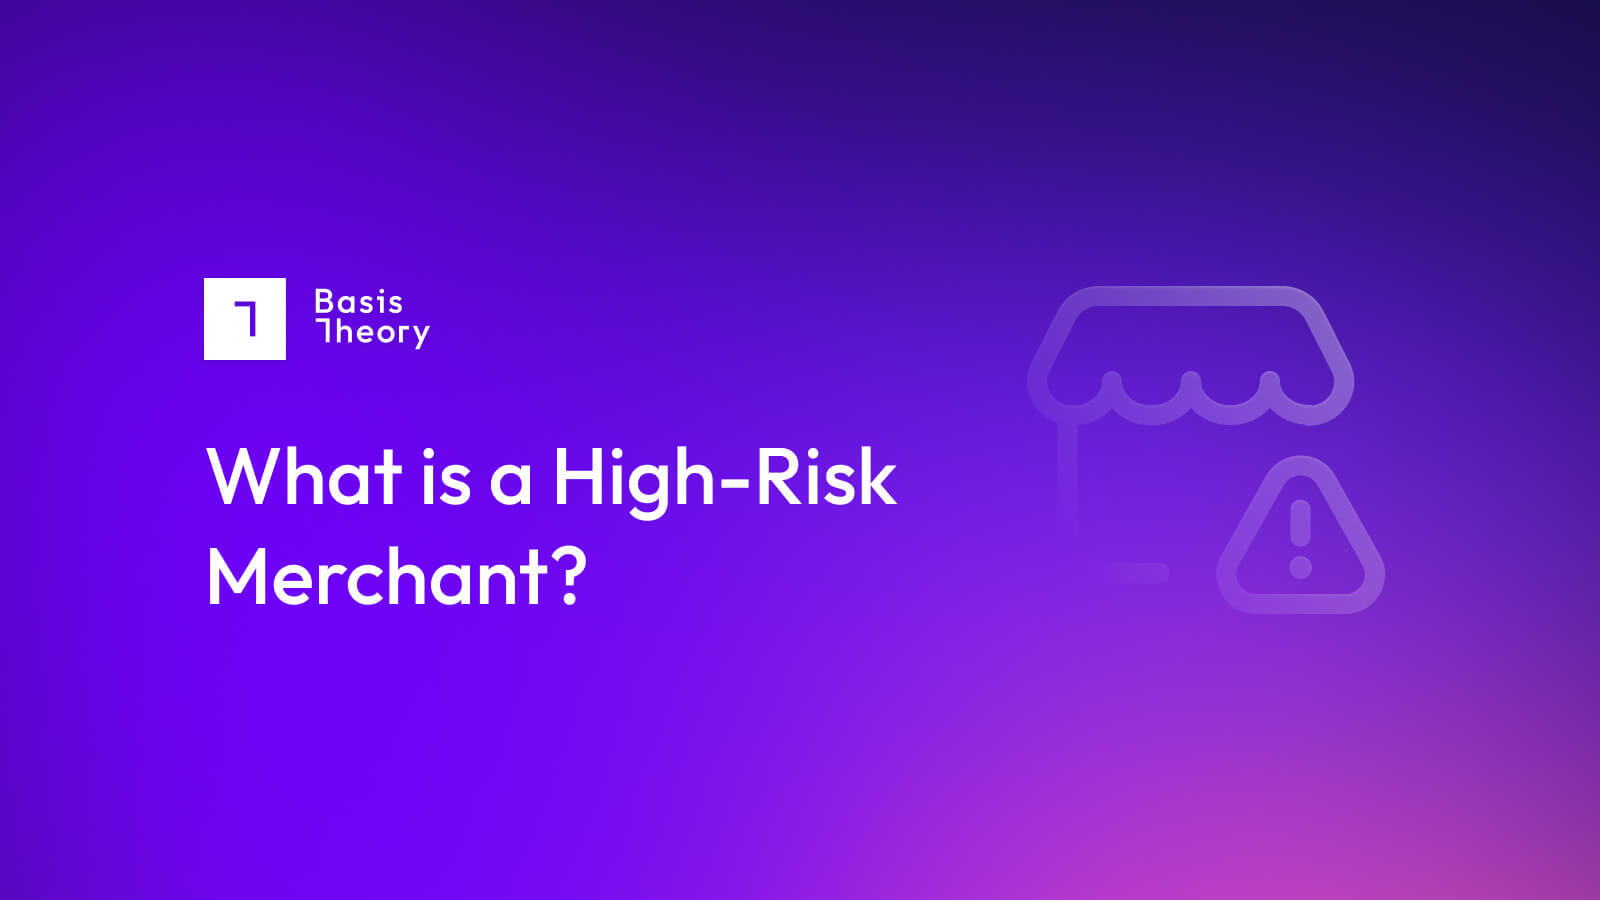 What is a high-risk merchant?